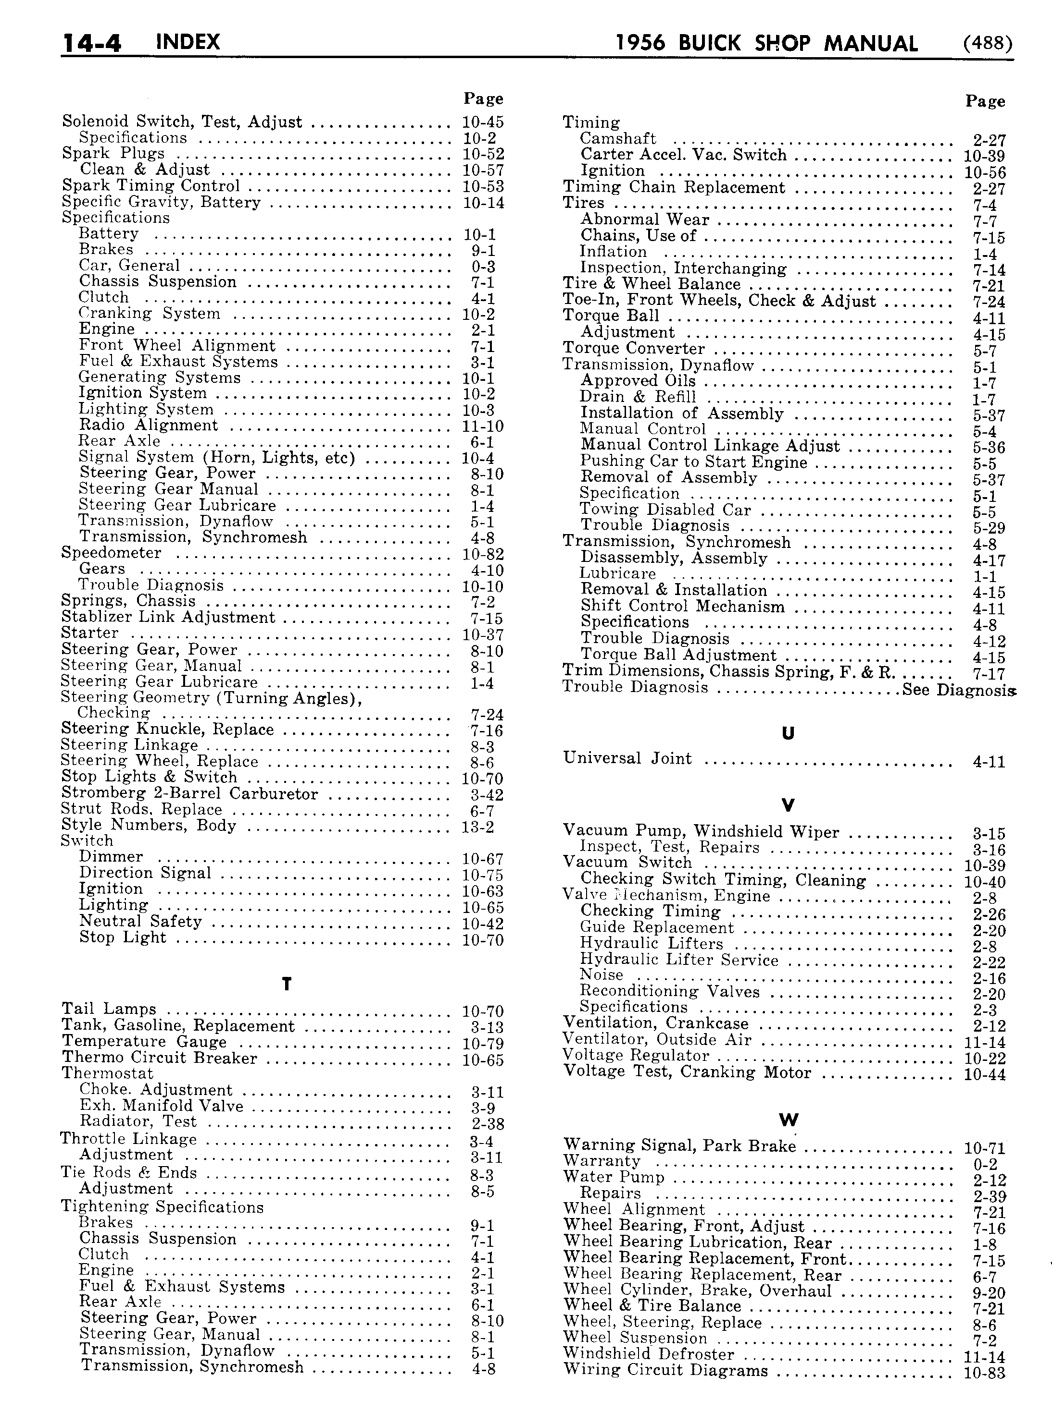 n_15 1956 Buick Shop Manual - Index-004-004.jpg